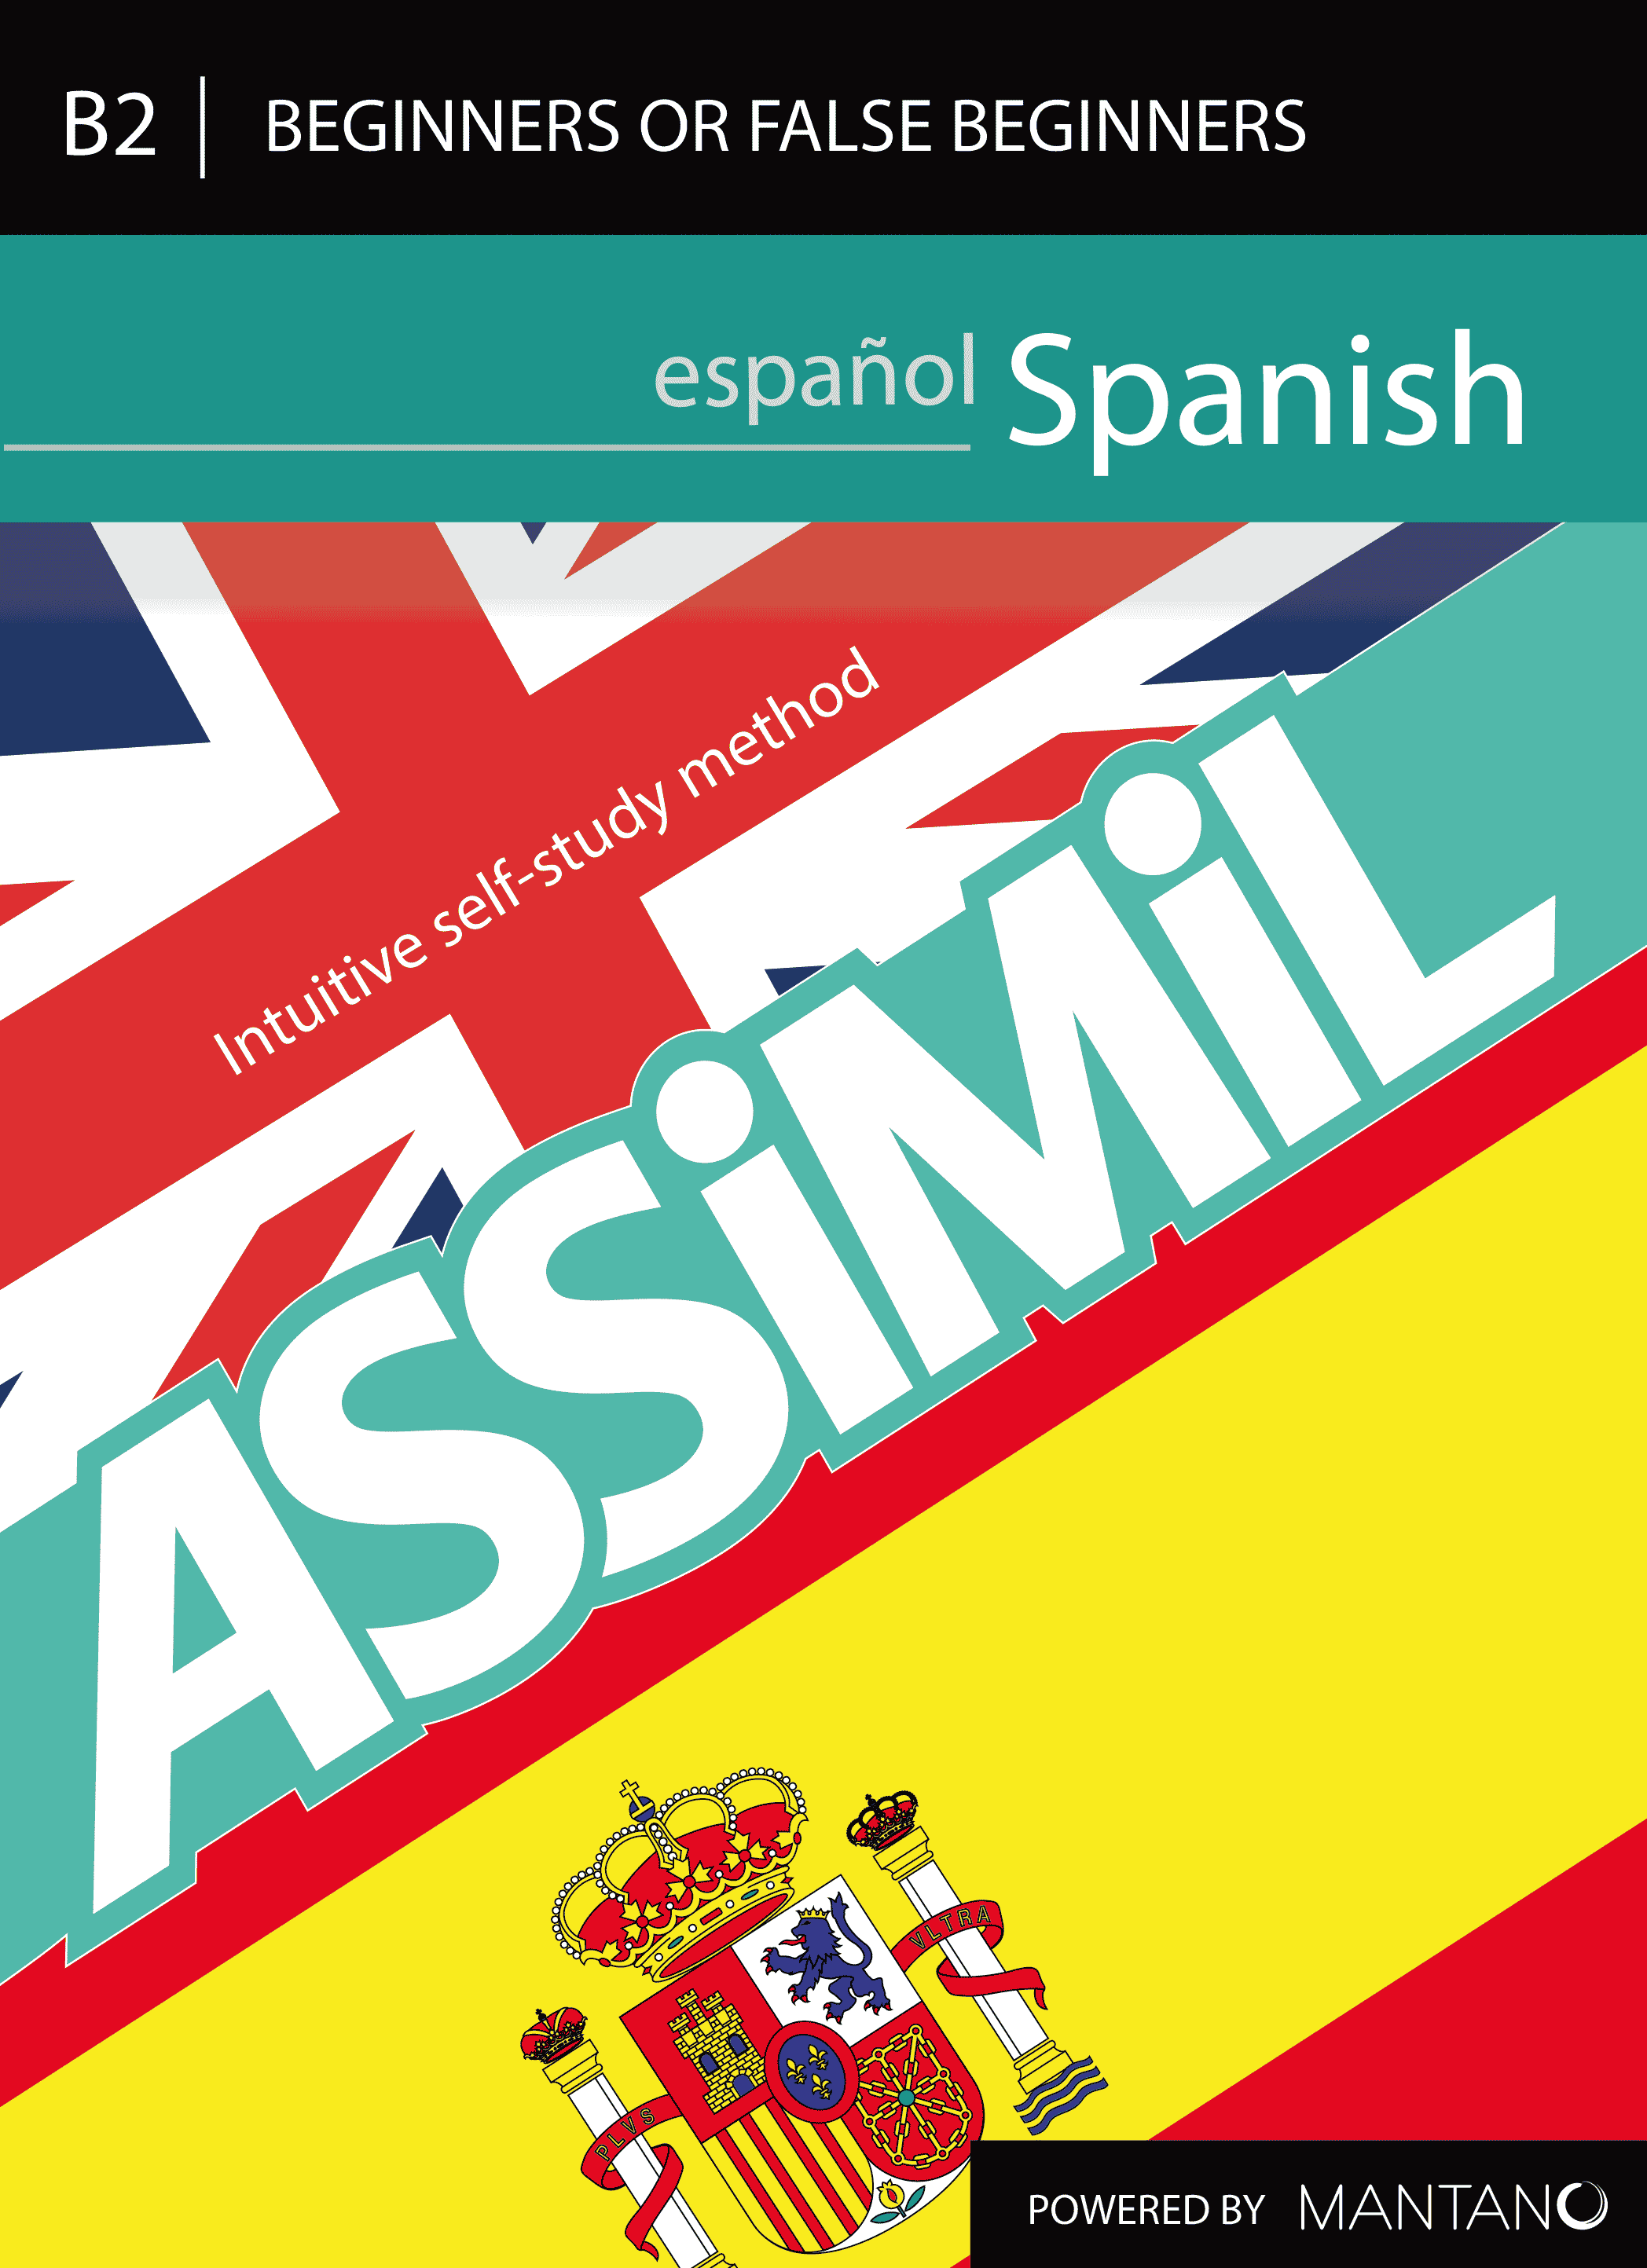 Assimil Spanish